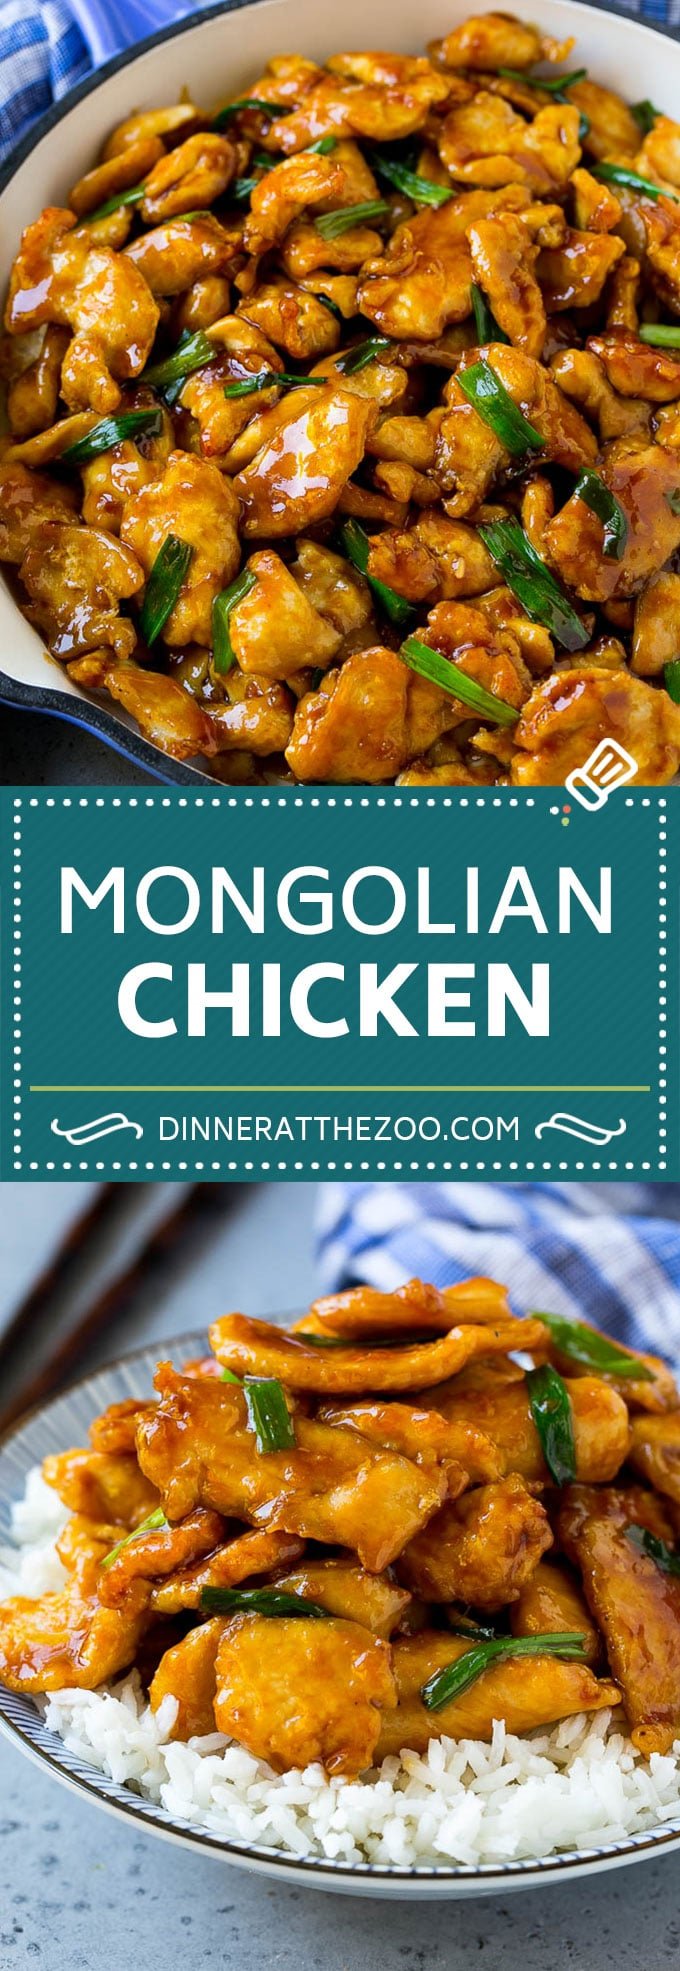 Mongolian Chicken Recipe | Chicken Stir Fry | Asian Chicken #chicken #stirfry #asian #dinner #dinneratthezoo